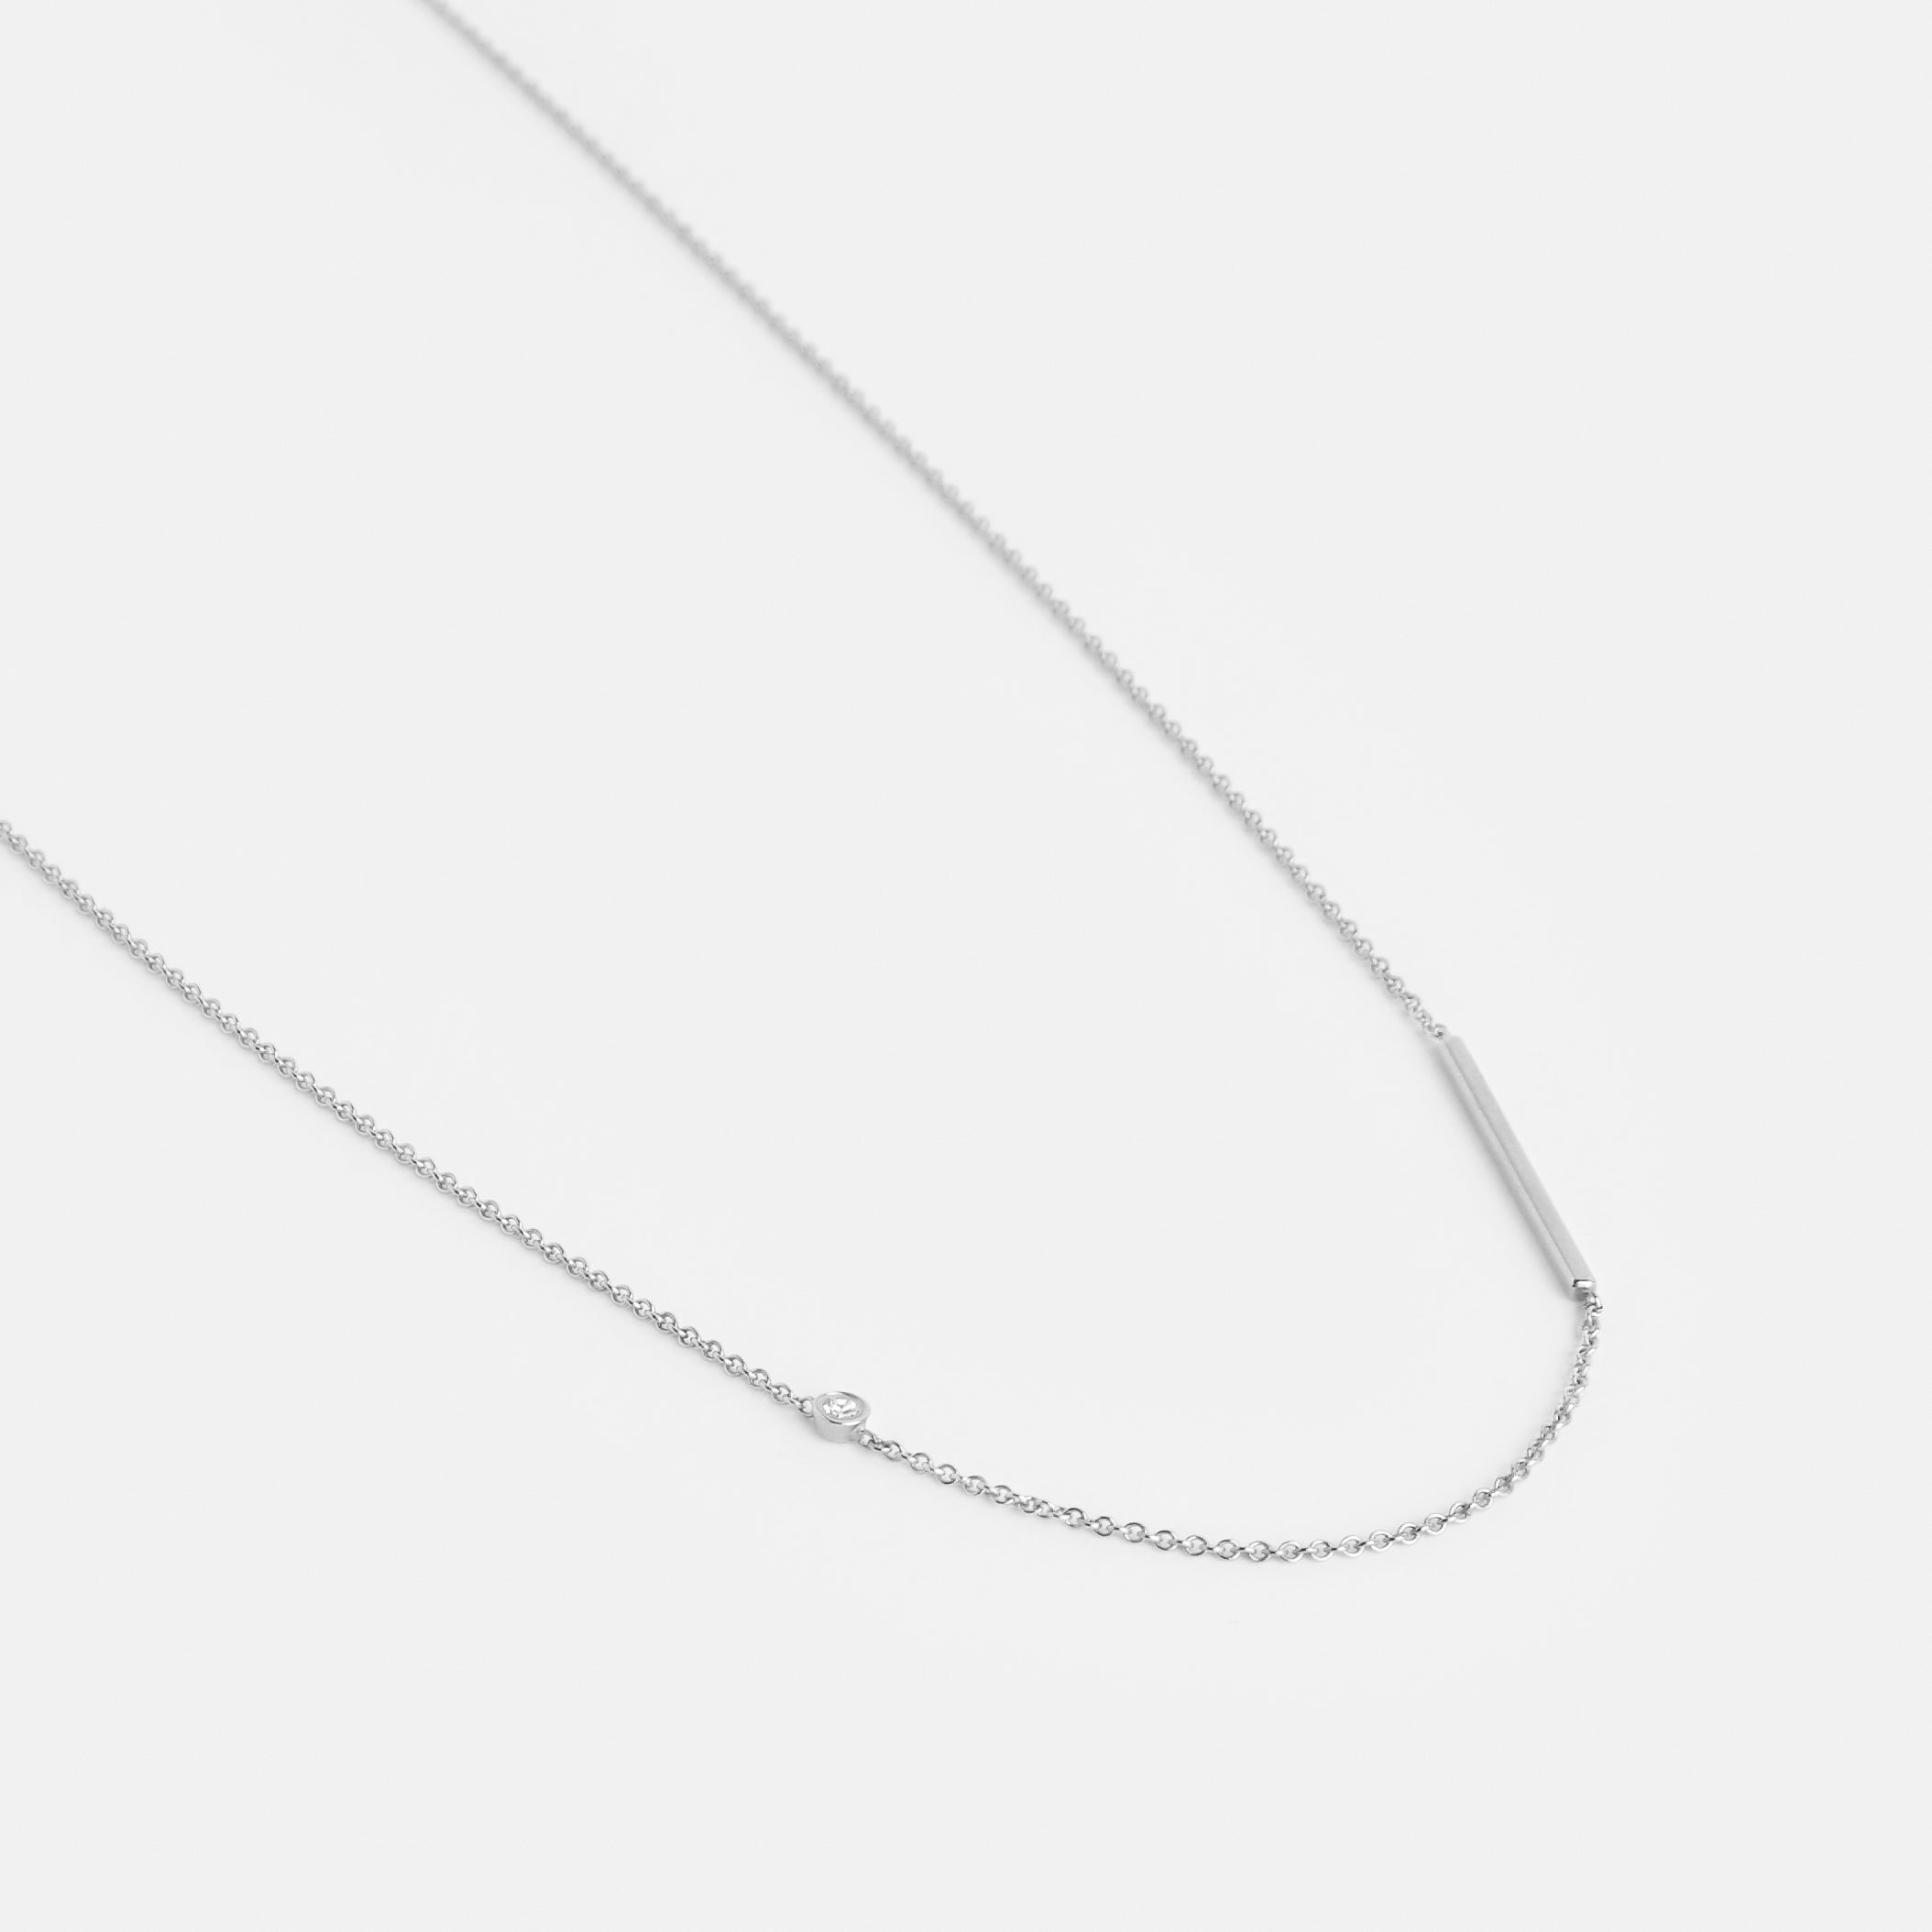 Iki Alternative Necklace in 14k White Gold set with White Diamond By SHW Fine Jewelry NYC